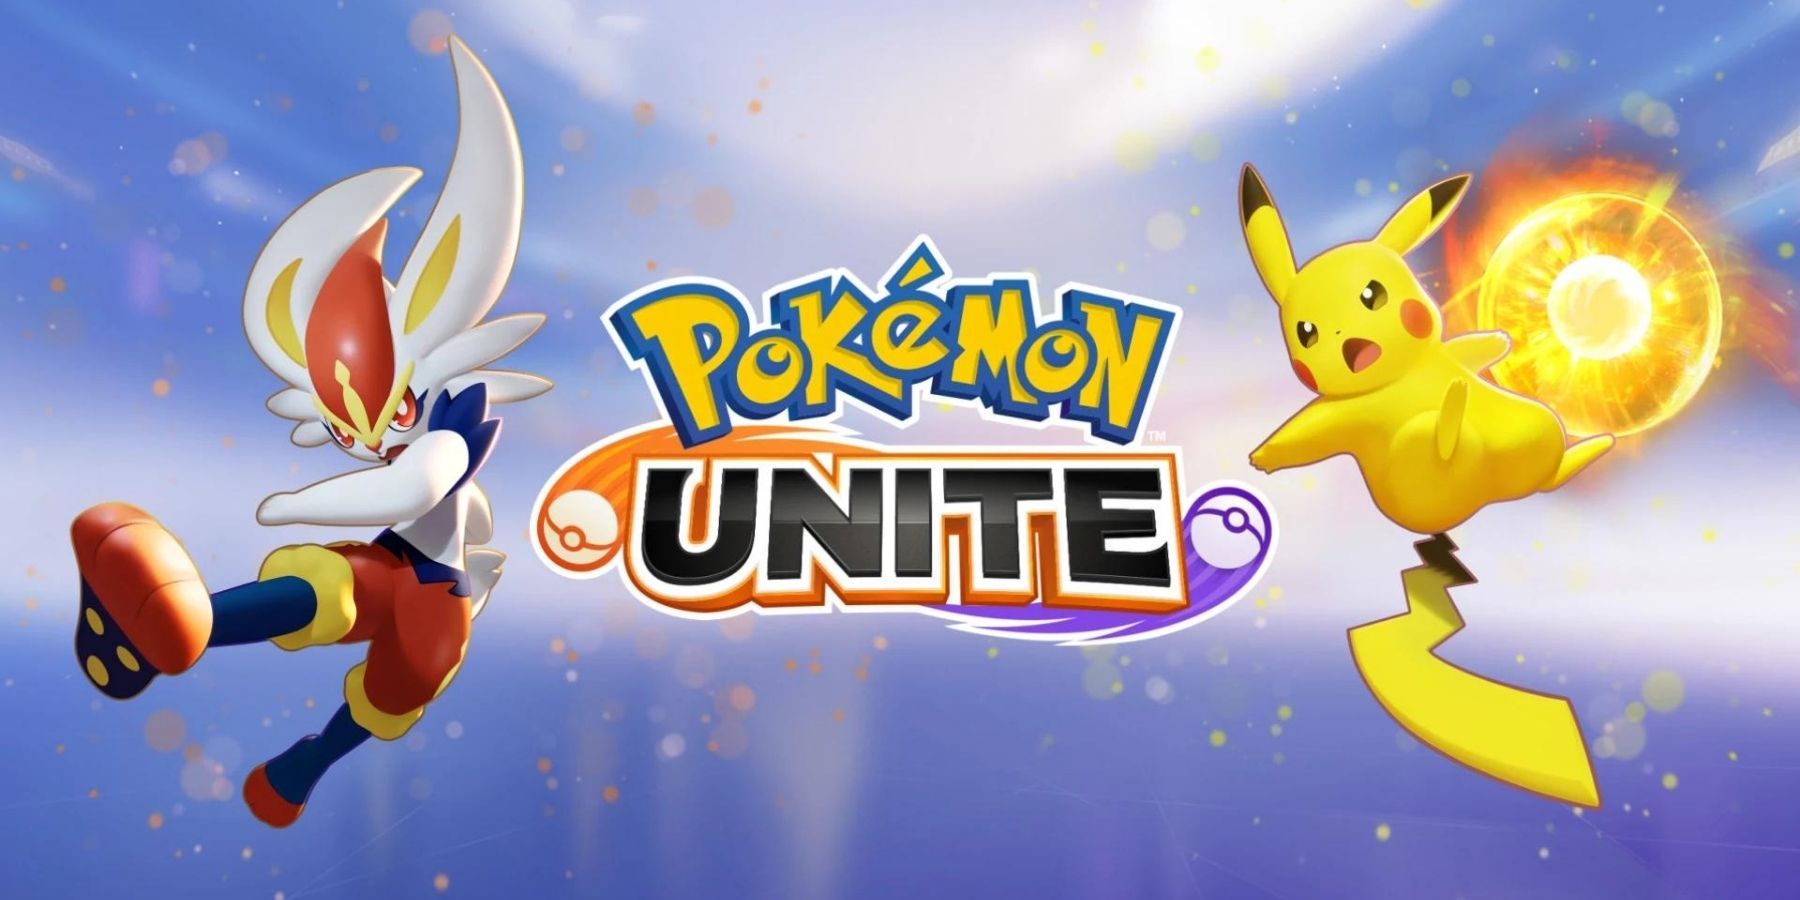 pokemon unite logo with cinderace and pikachu